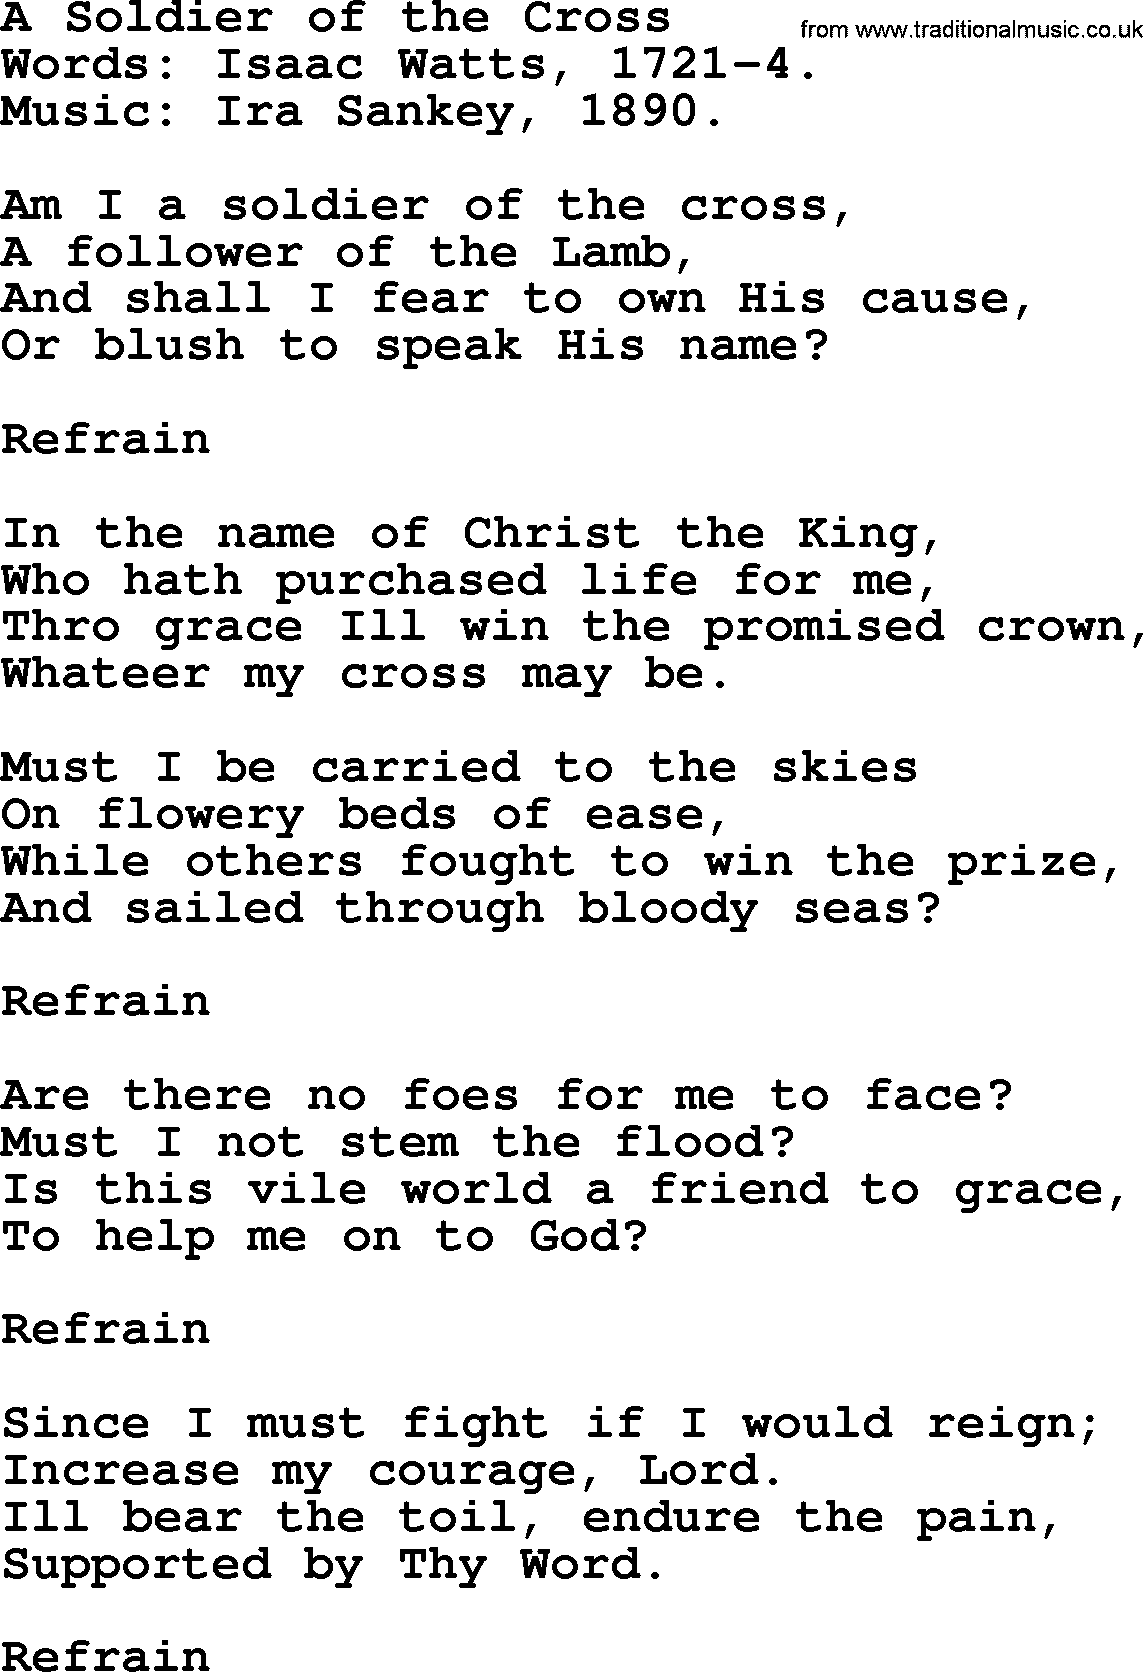 Isaac Watts Christian hymn: A Soldier of the Cross- lyricss